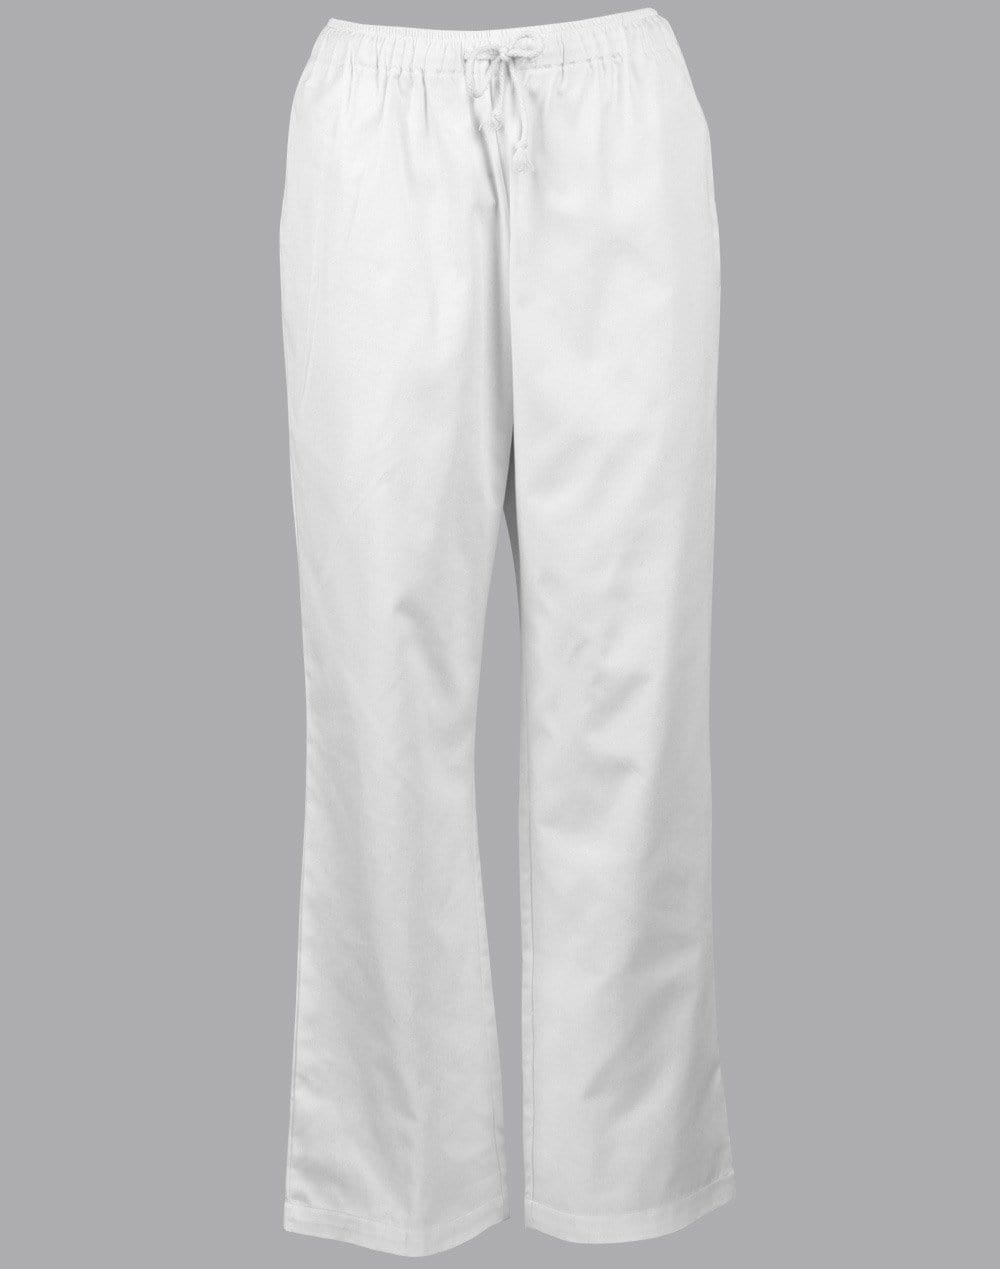 Chef's Pants CP01 Hospitality & Chefwear Australian Industrial Wear XS White 